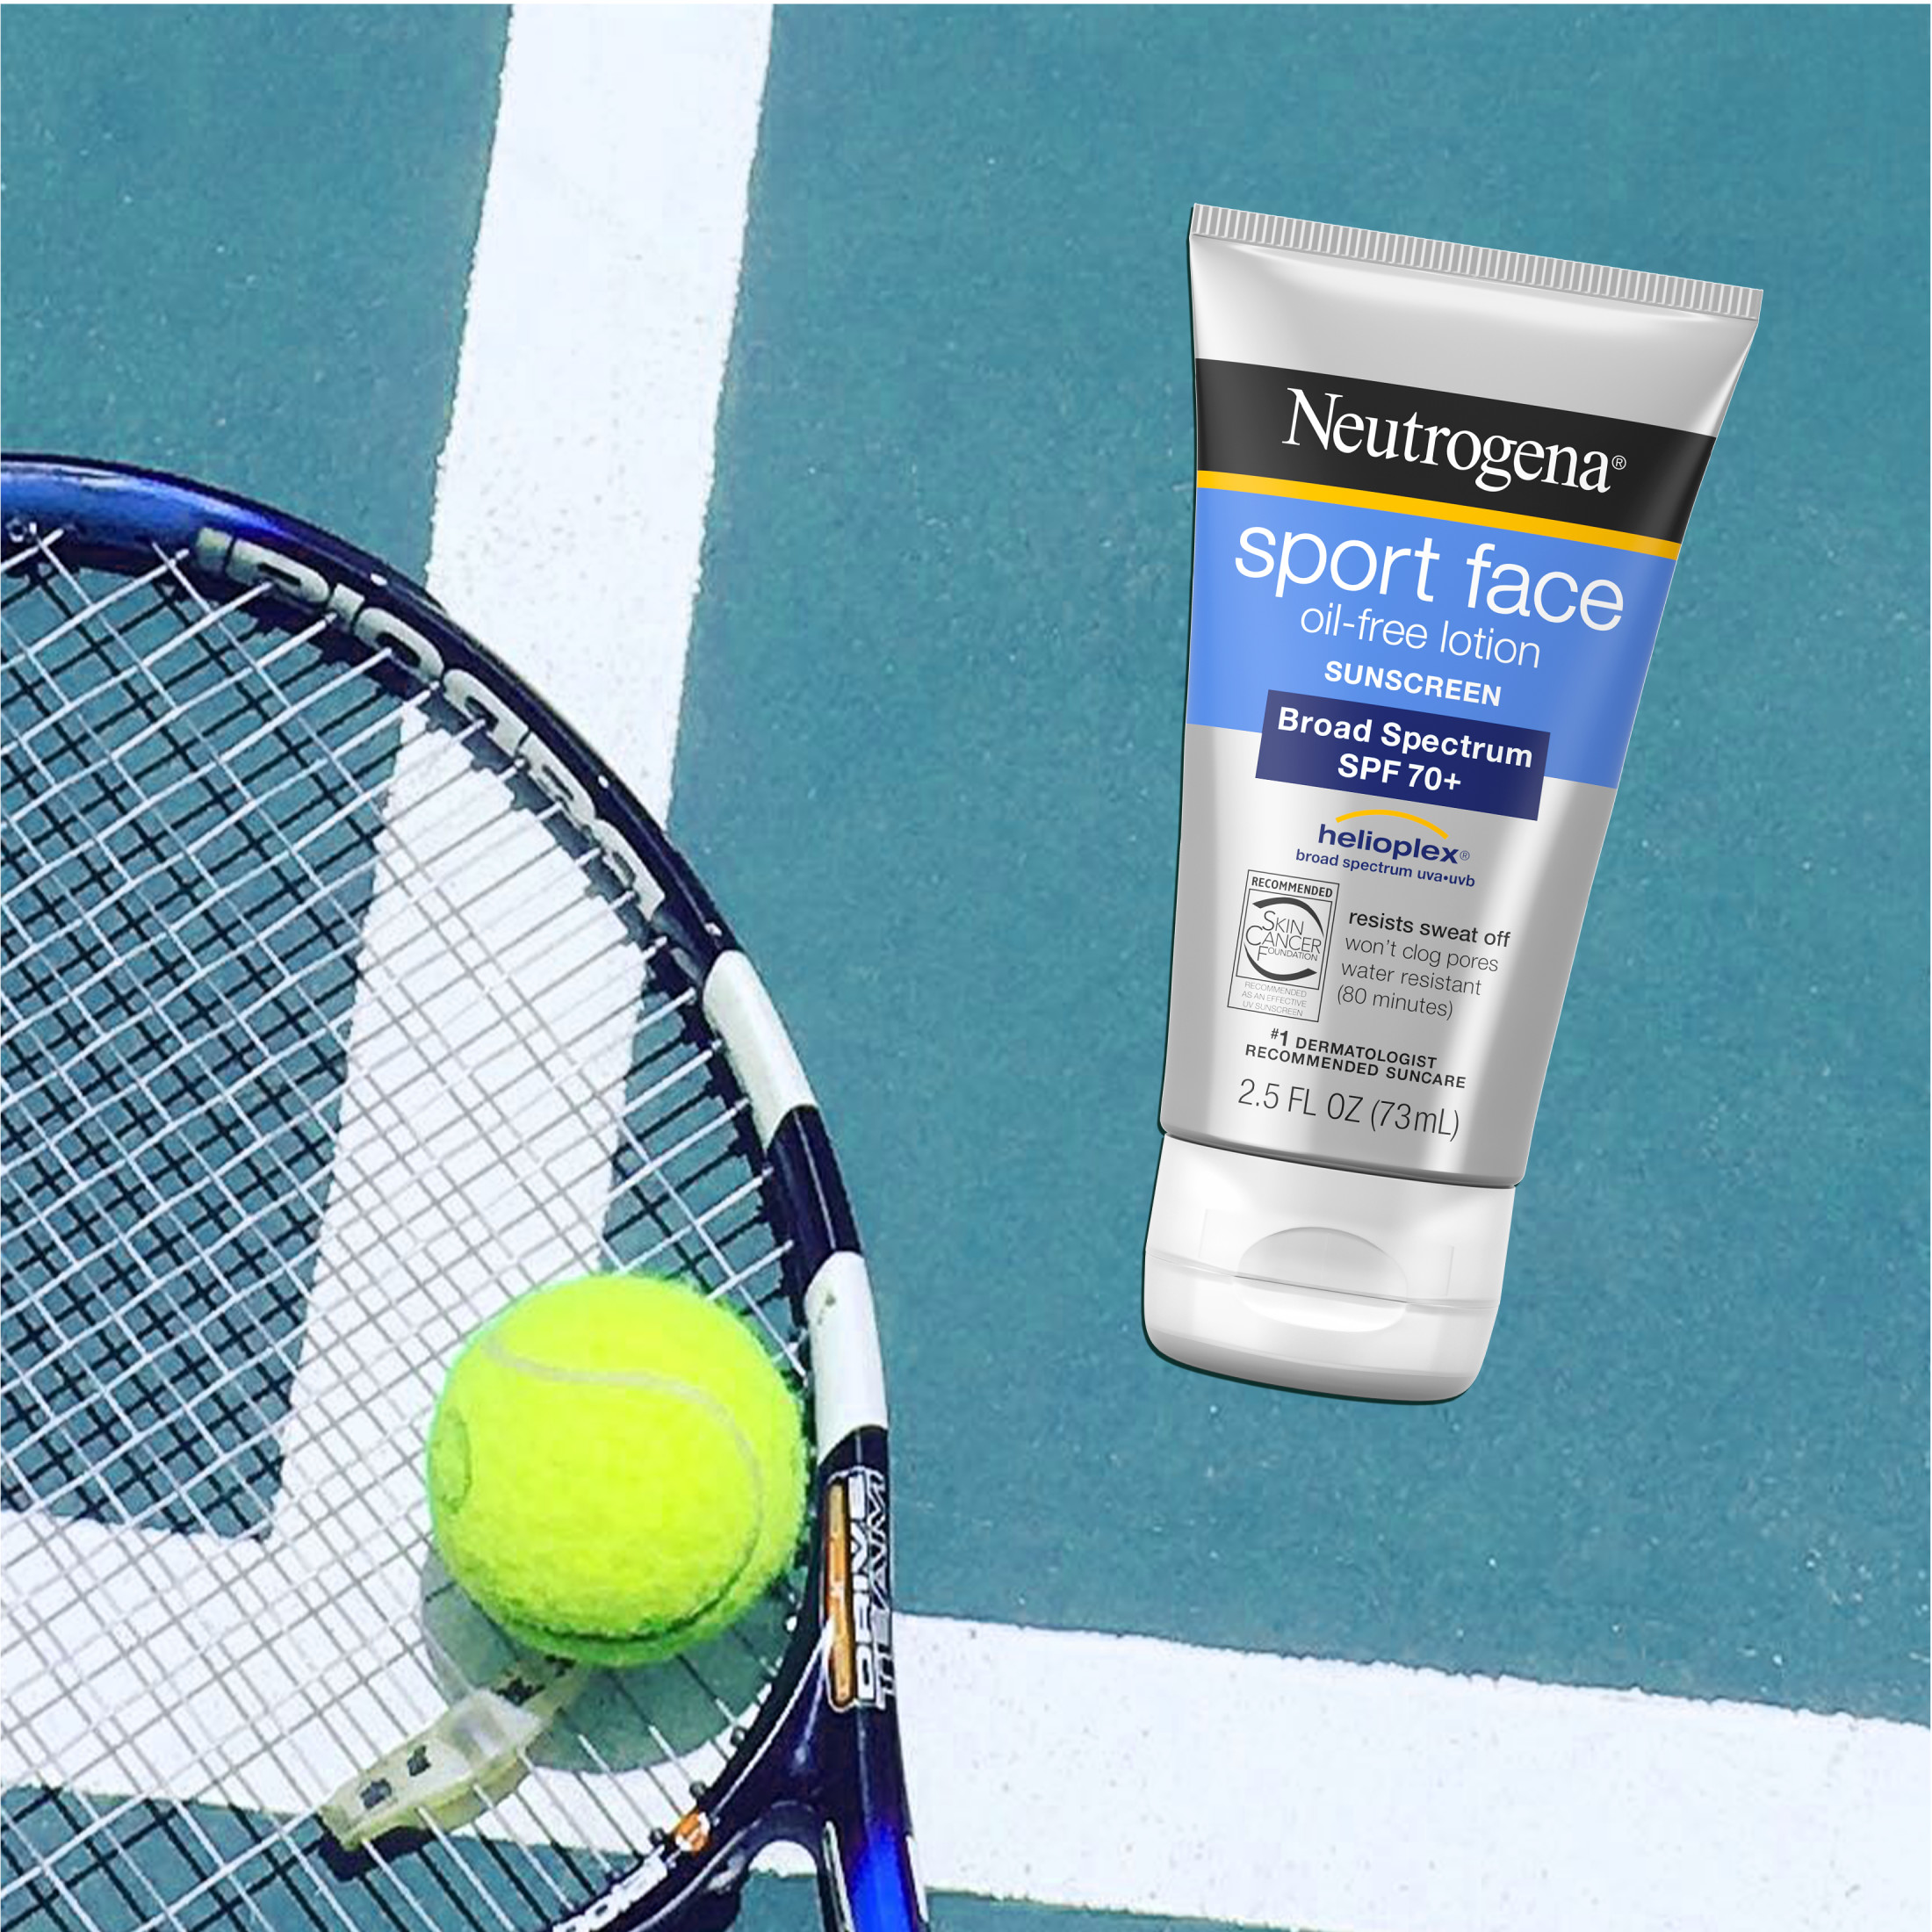 Neutrogena Sport Face Oil-Free Lotion Sunscreen, SPF 70+ Sunblock, 2.5 fl oz - image 4 of 9